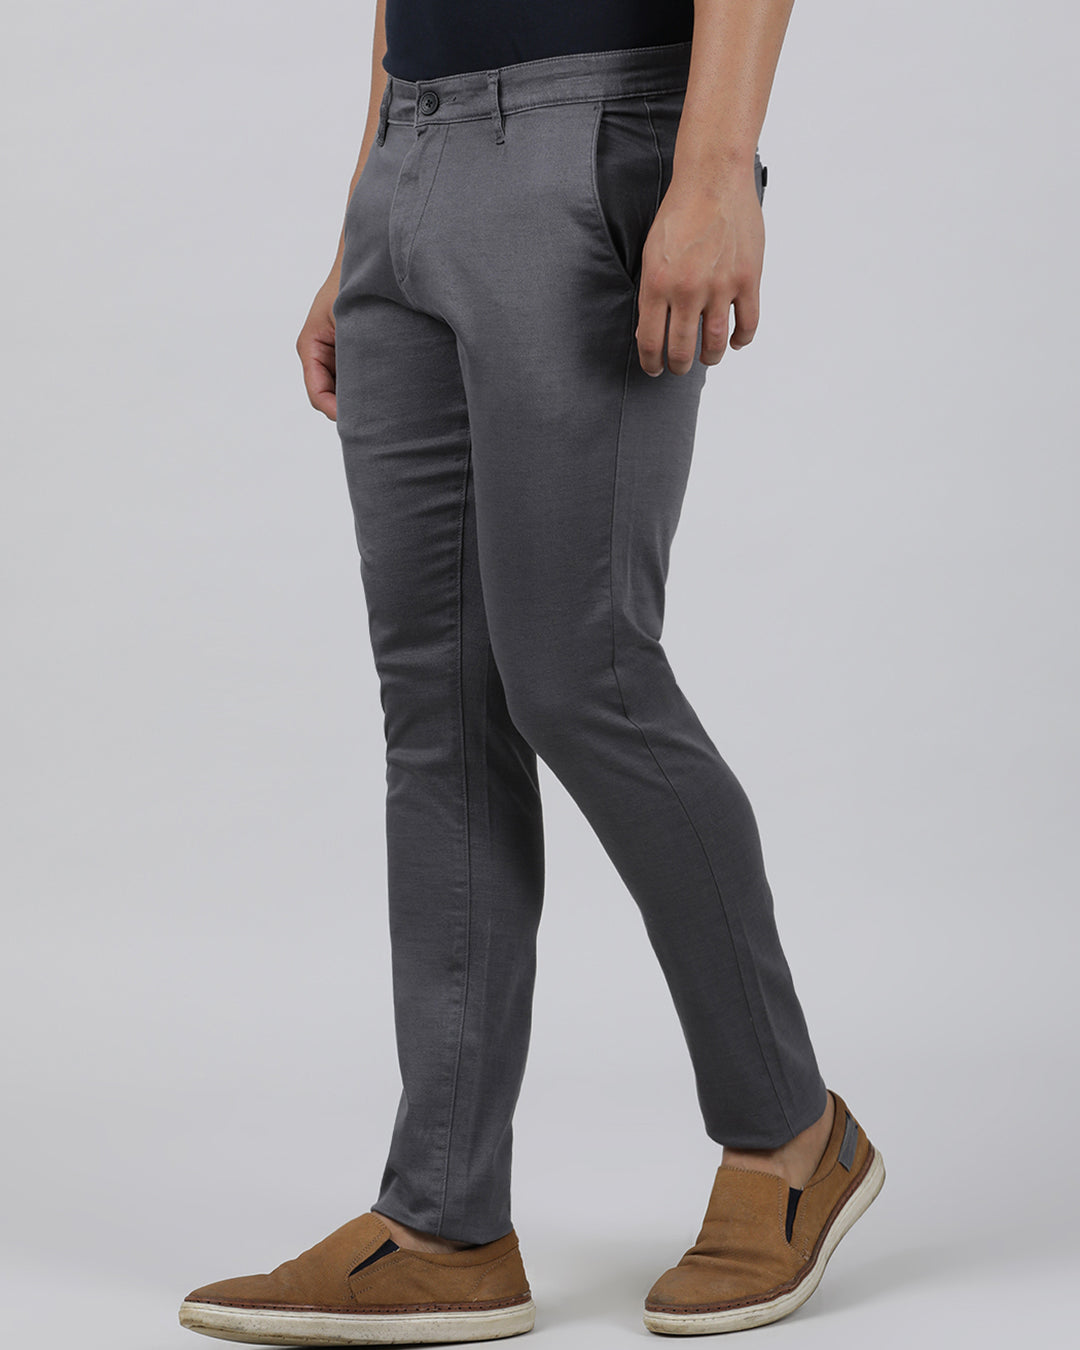 Casual Slim Fit Printed Grey Trousers for Men